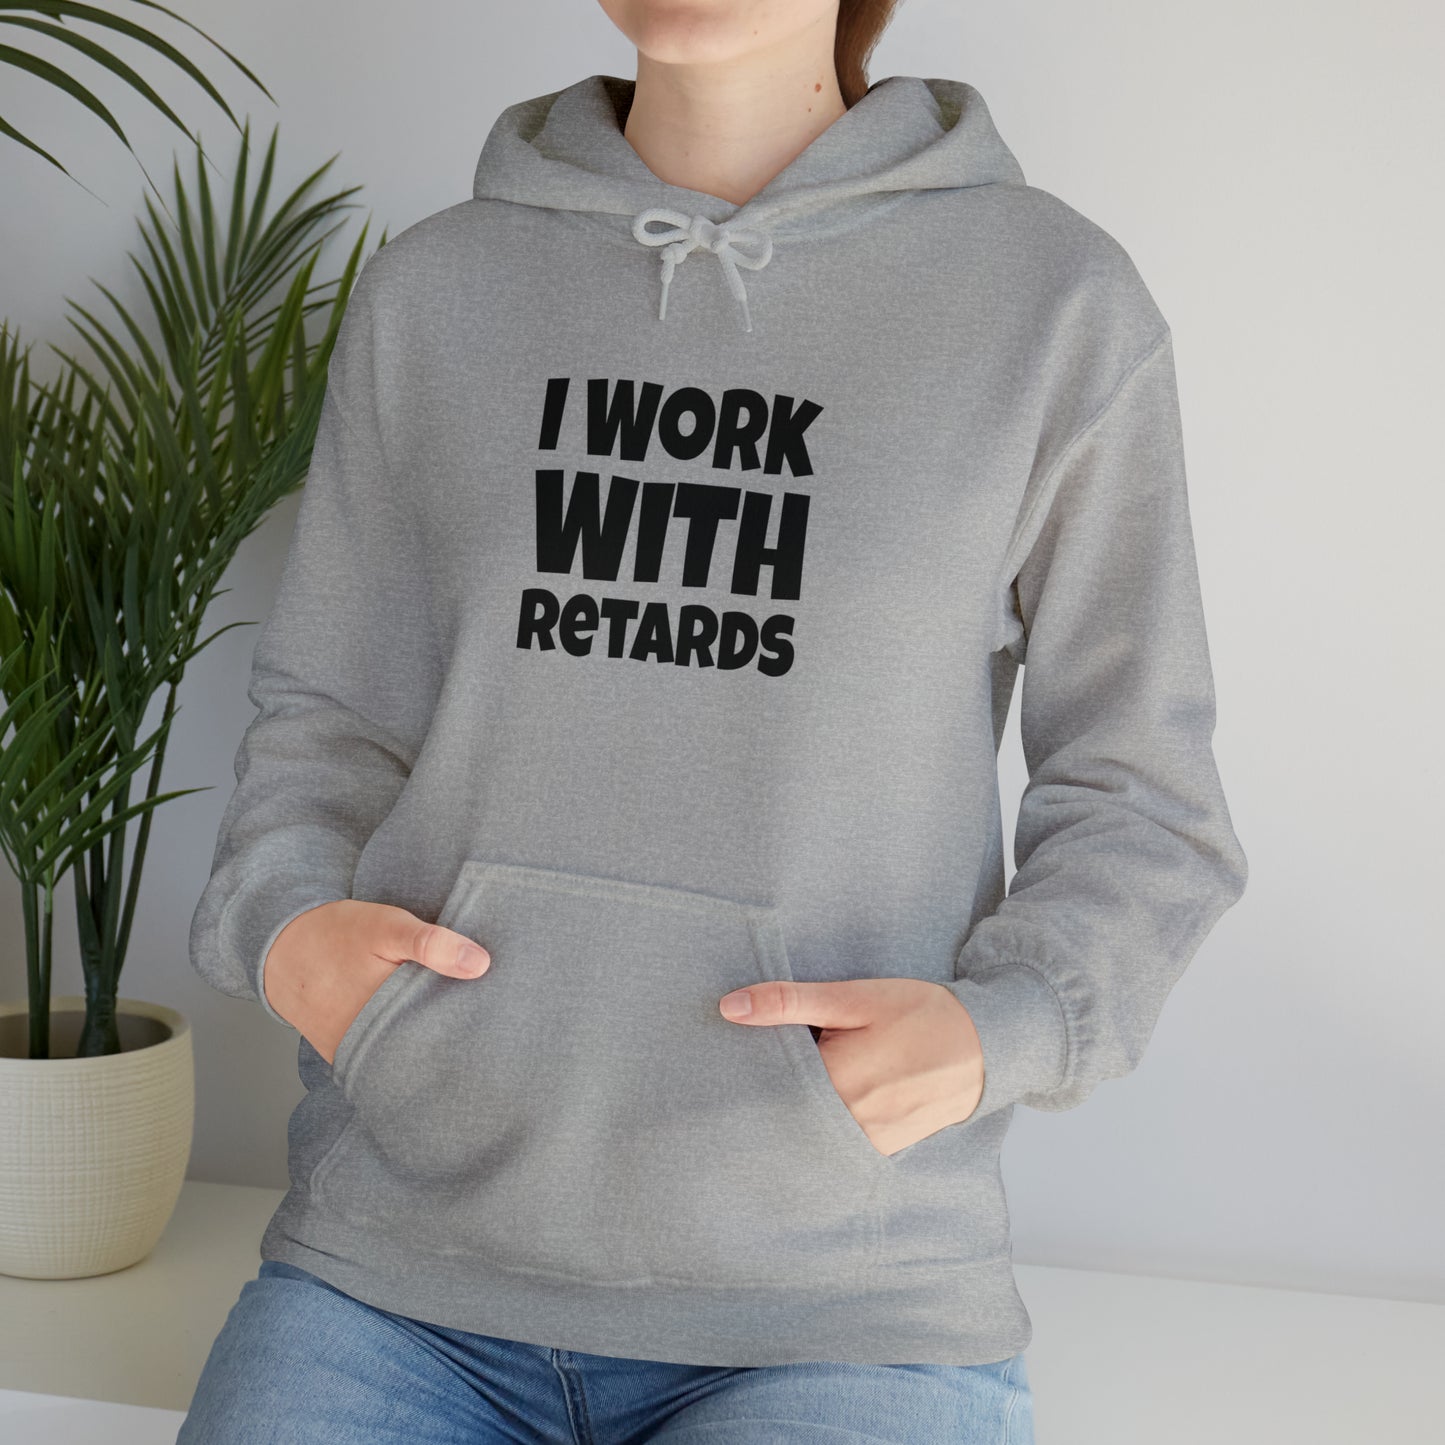 I Work with Retards - Hooded Sweatshirt